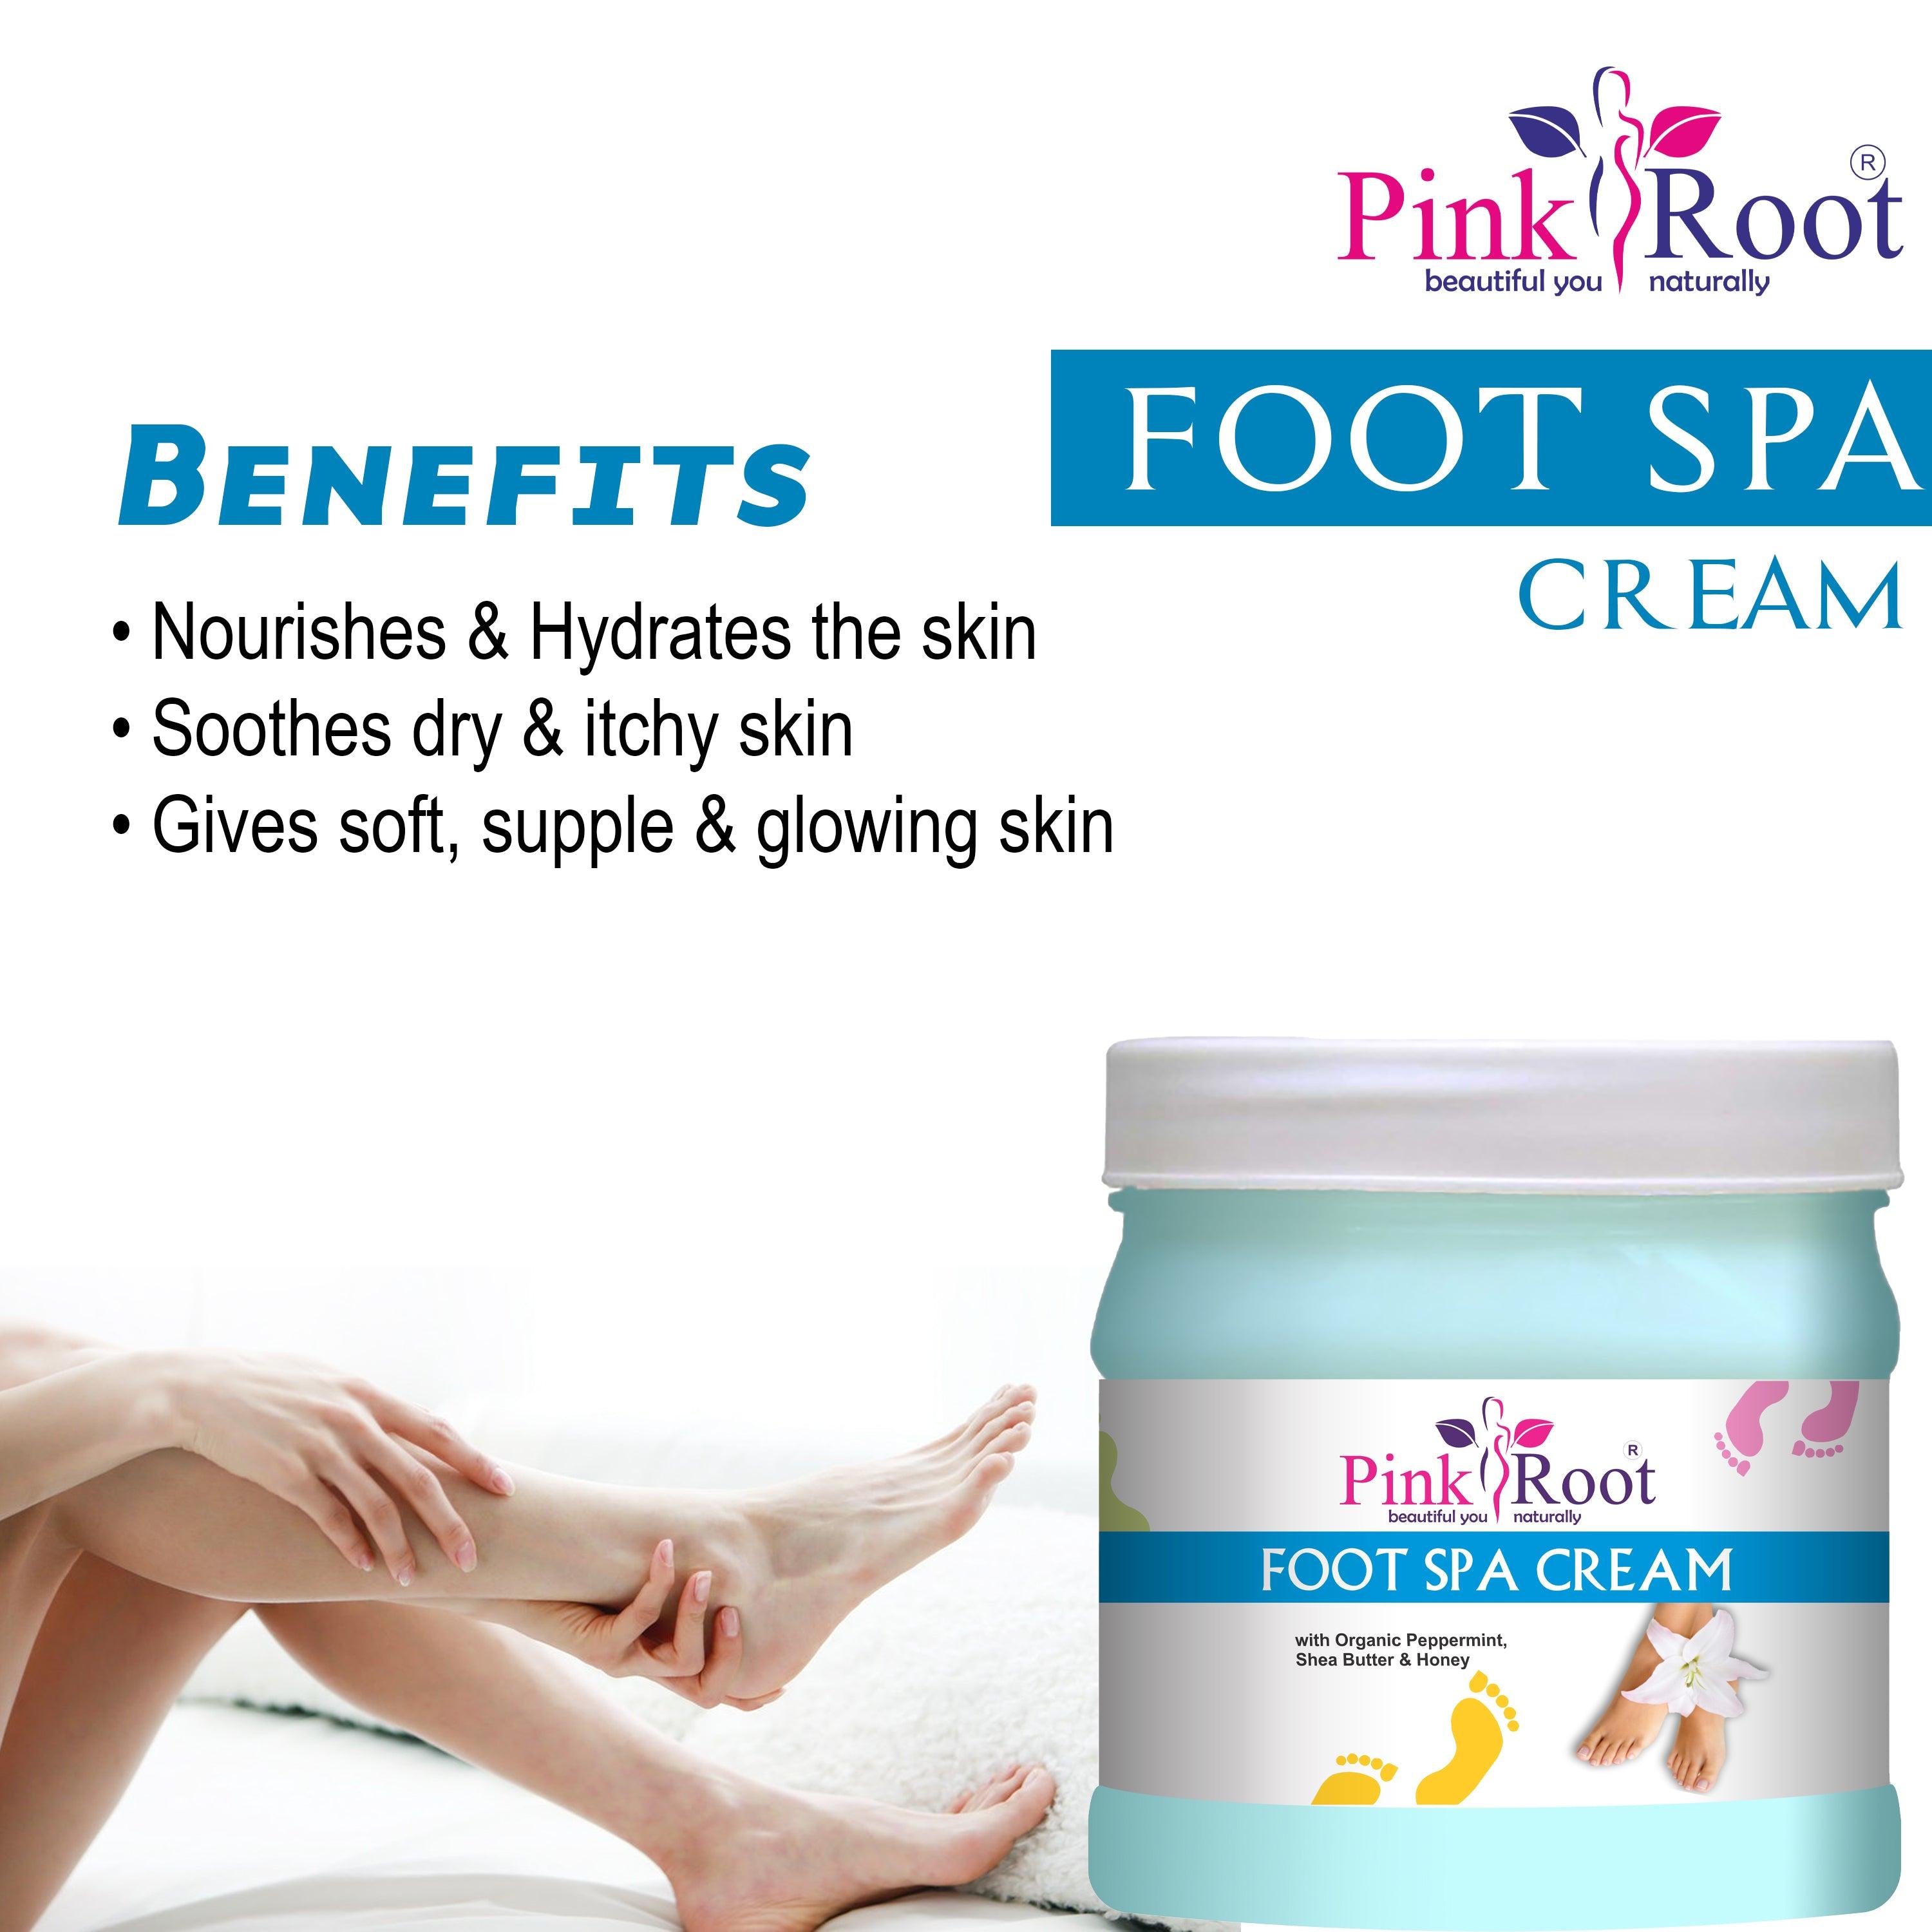 Foot Spa Cream 500ml - Pink Root